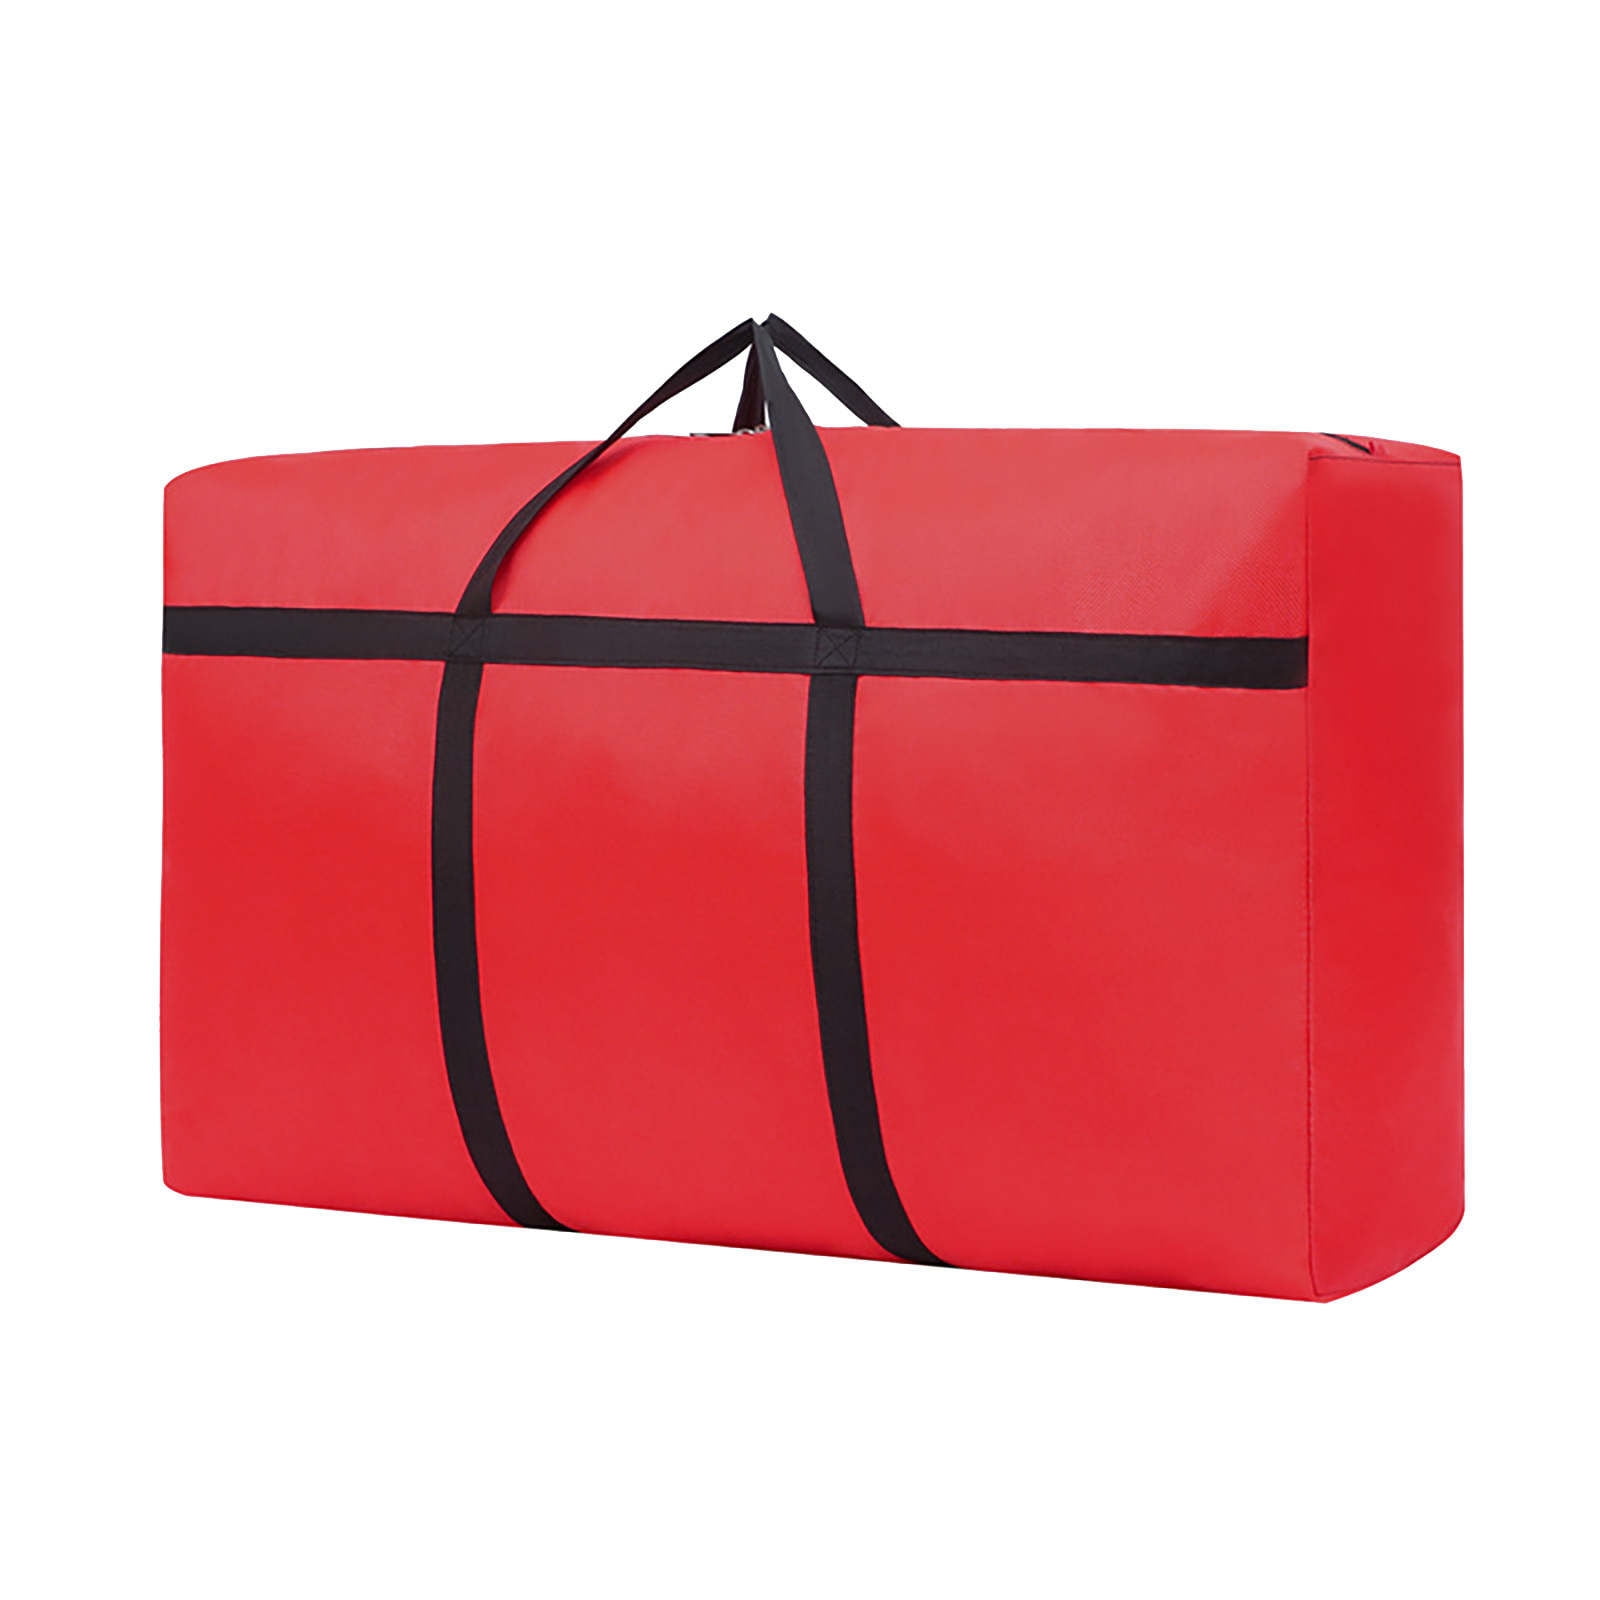 Vinsani® 2pcs Extra Lage Christmas Decoration Storage Bags